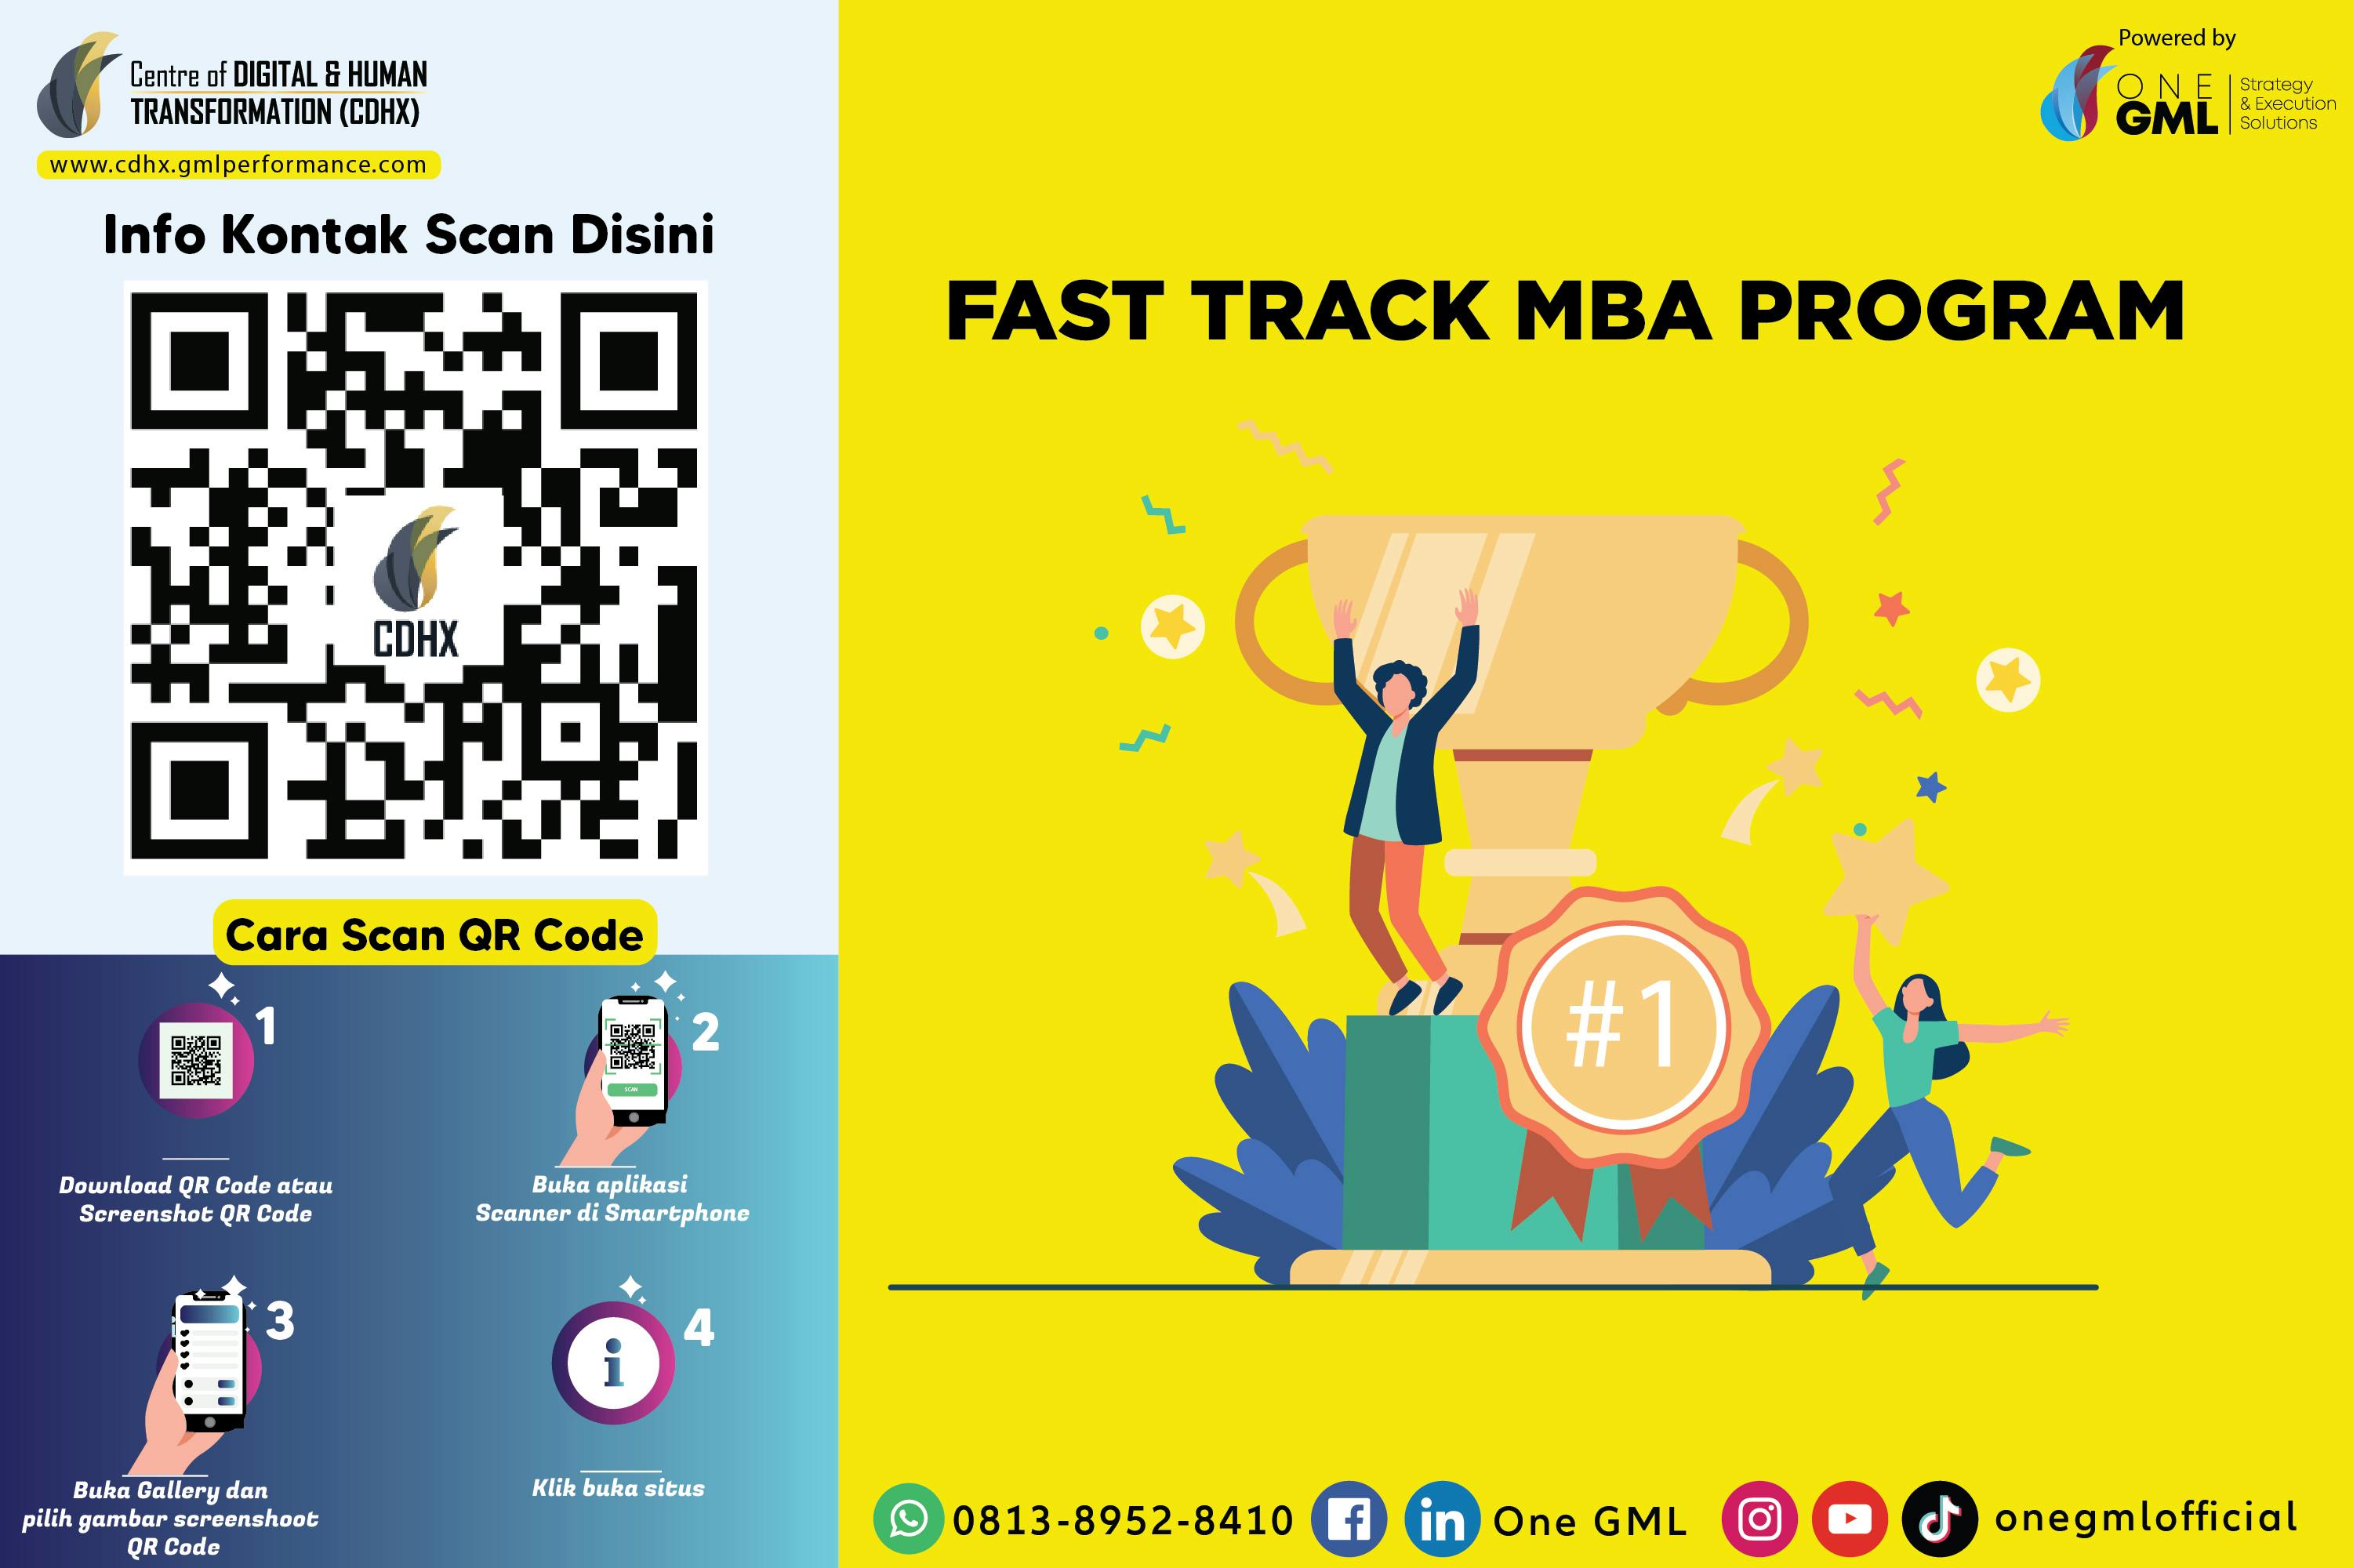 Fast Track MBA Program